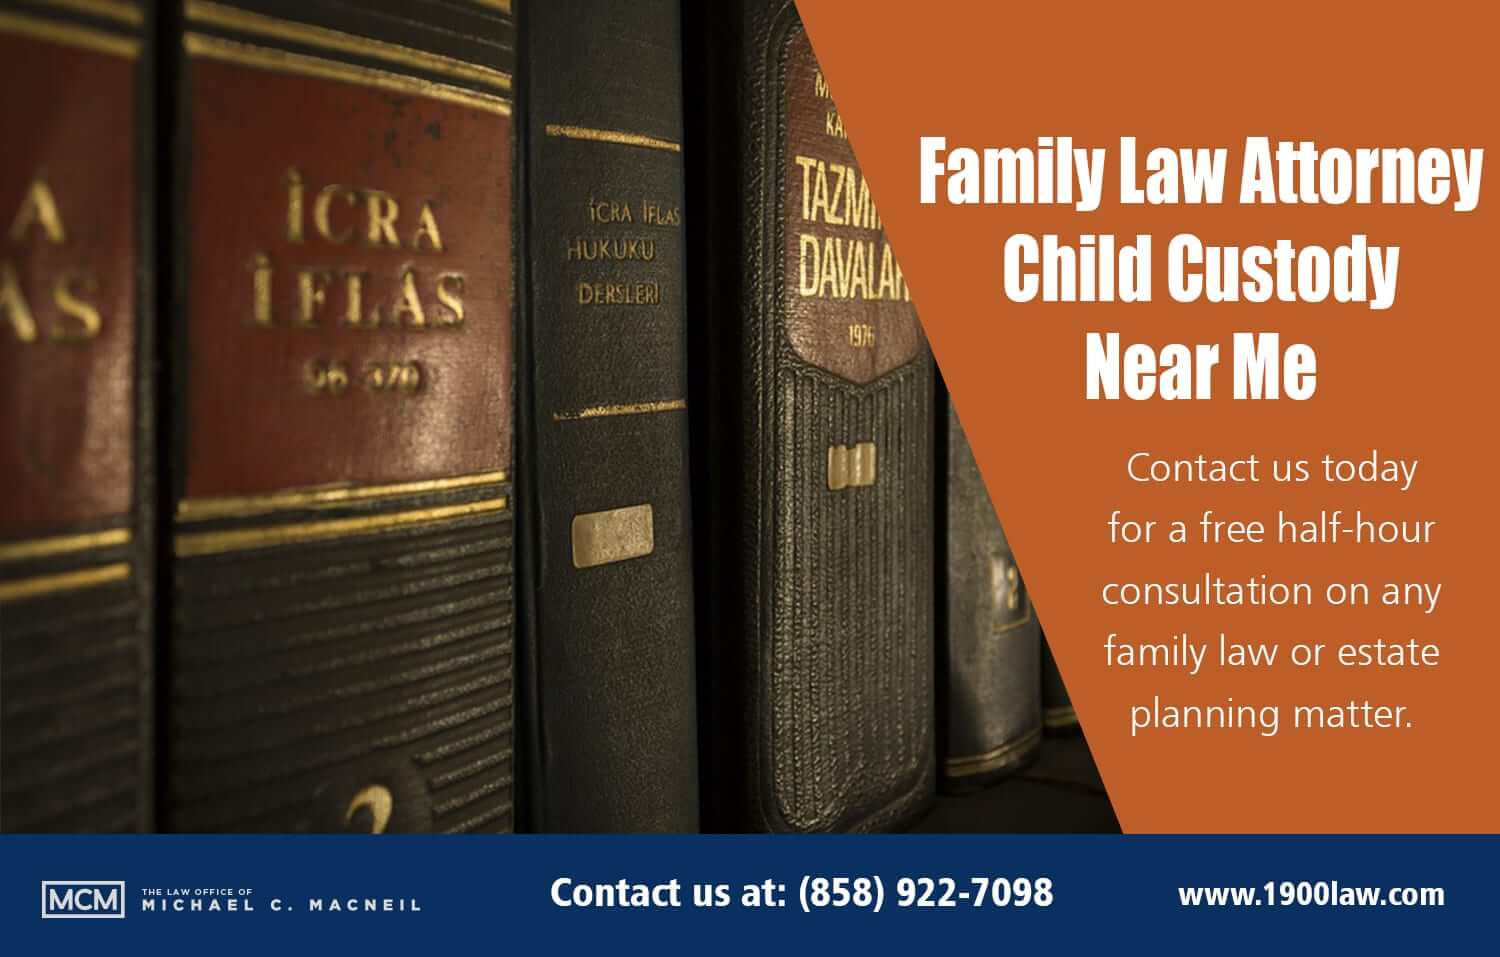 Family Law Attorney Child Custody Near Me